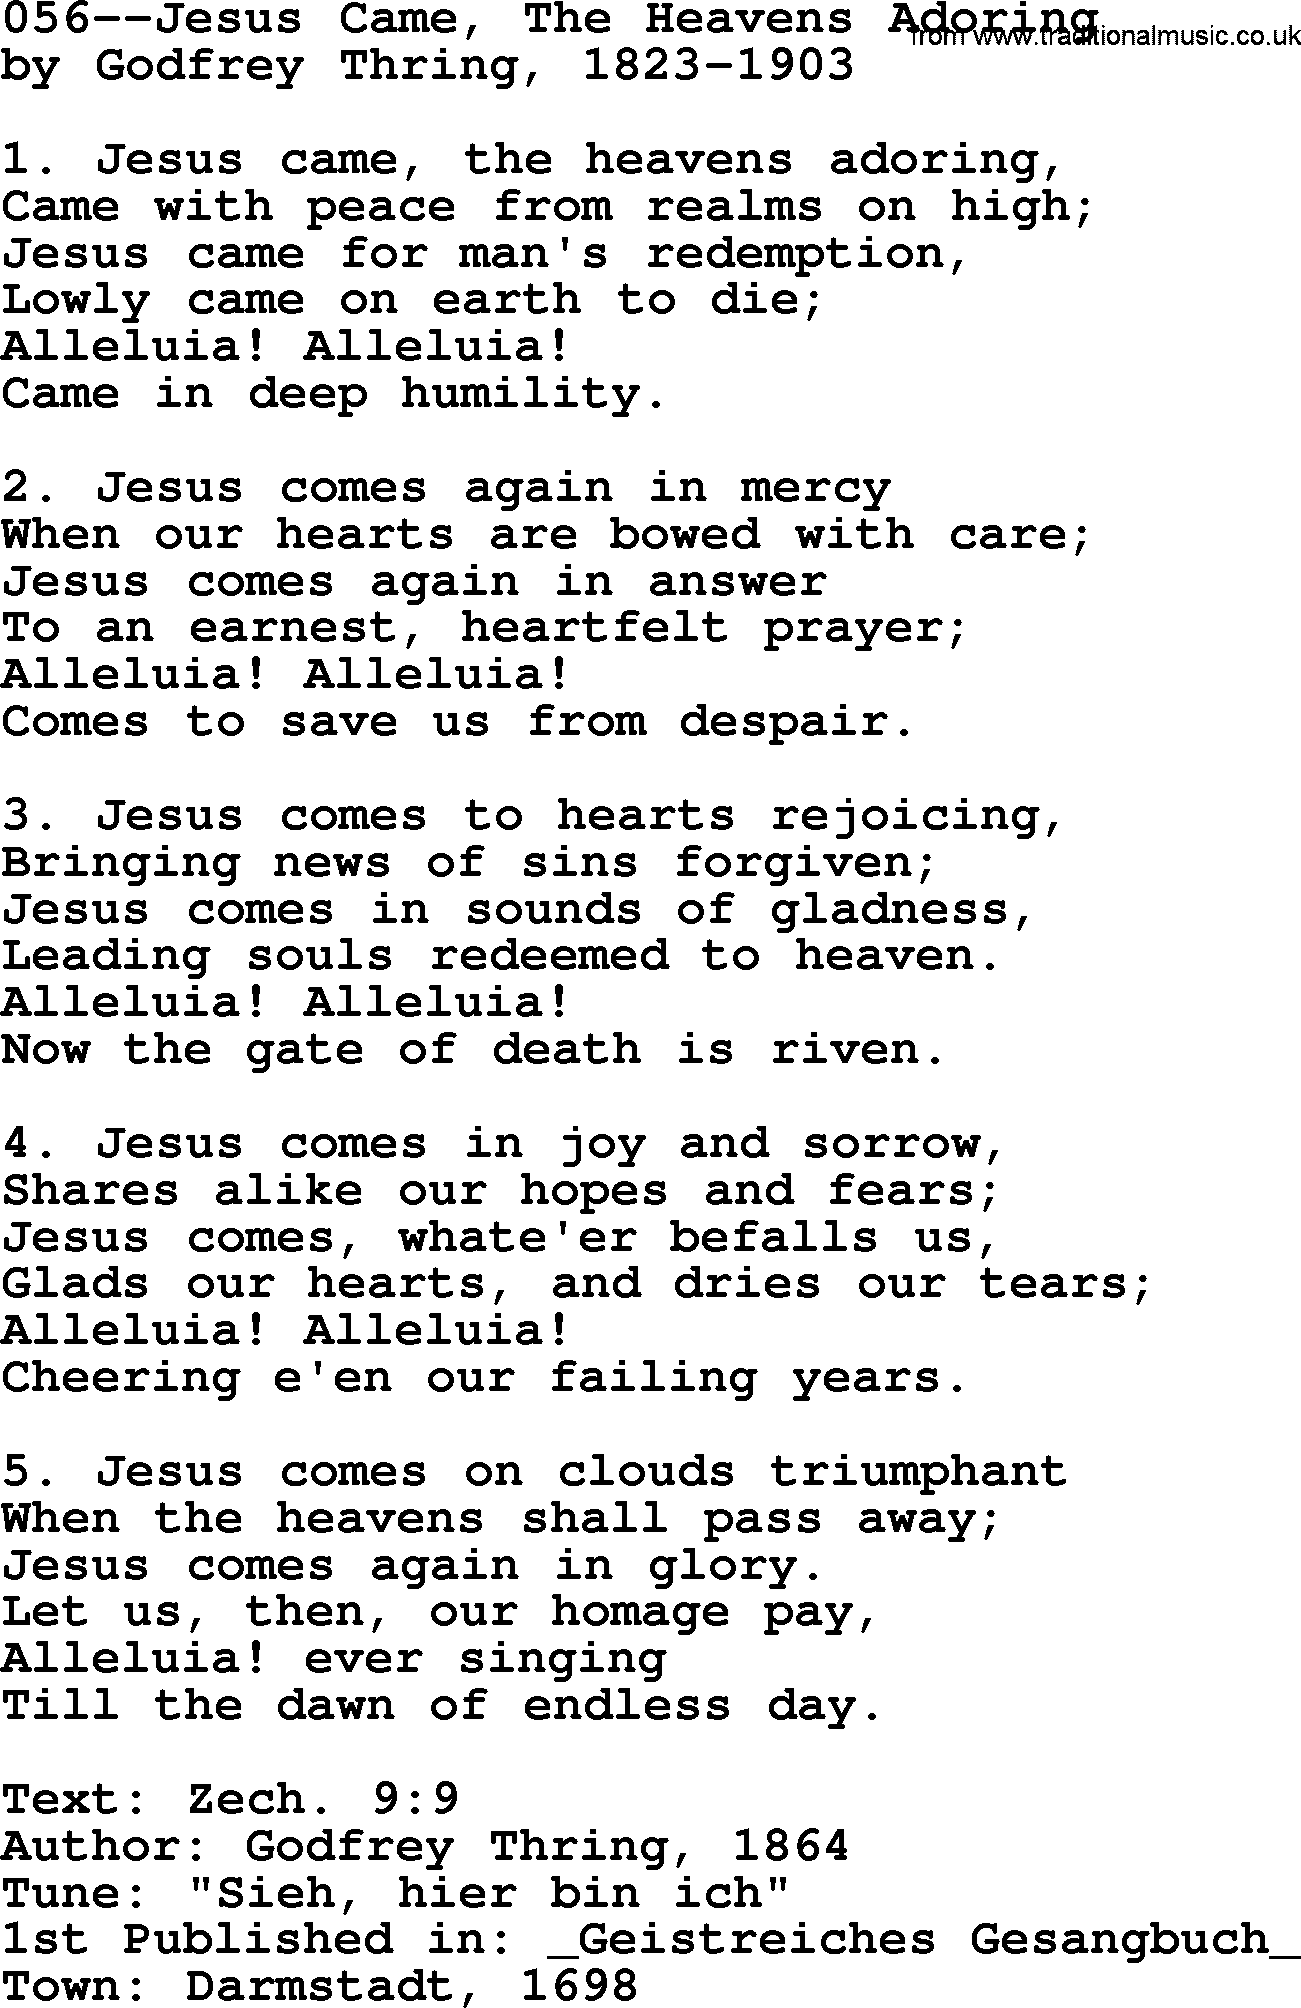 Lutheran Hymn: 056--Jesus Came, The Heavens Adoring.txt lyrics with PDF